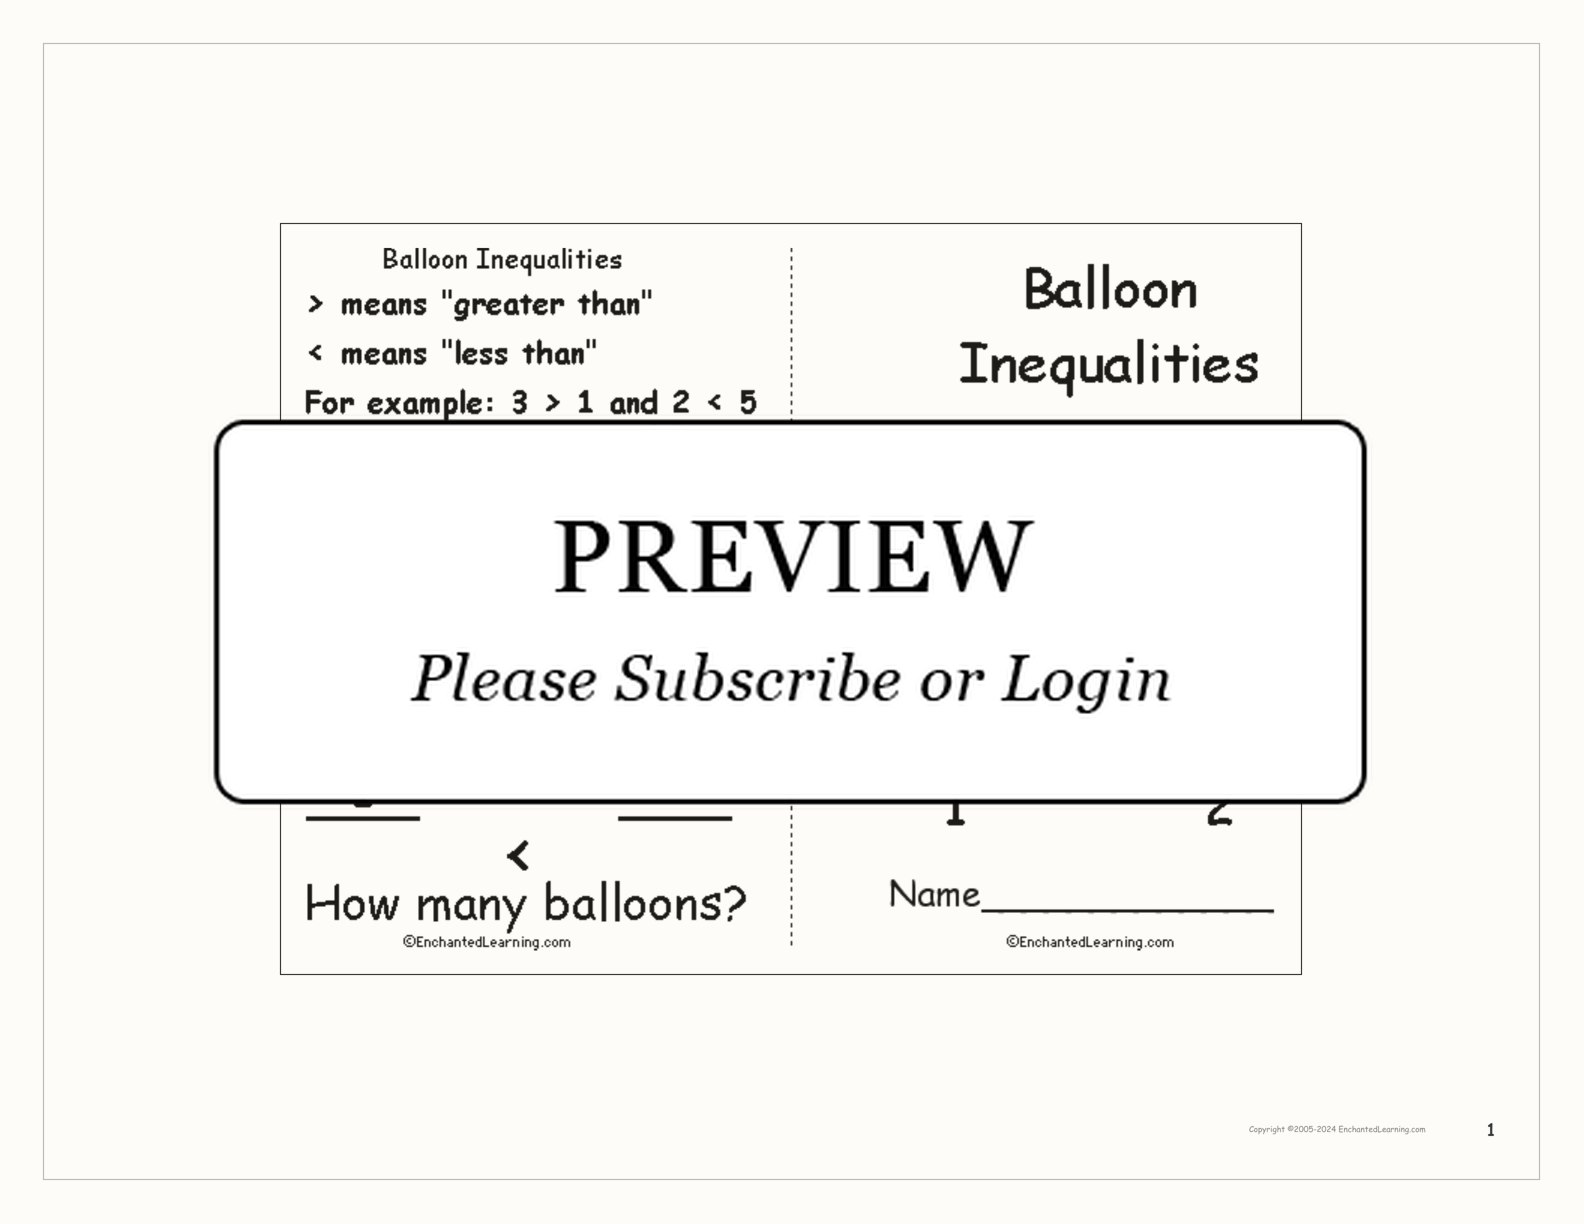 Balloon Inequalities Book interactive worksheet page 1